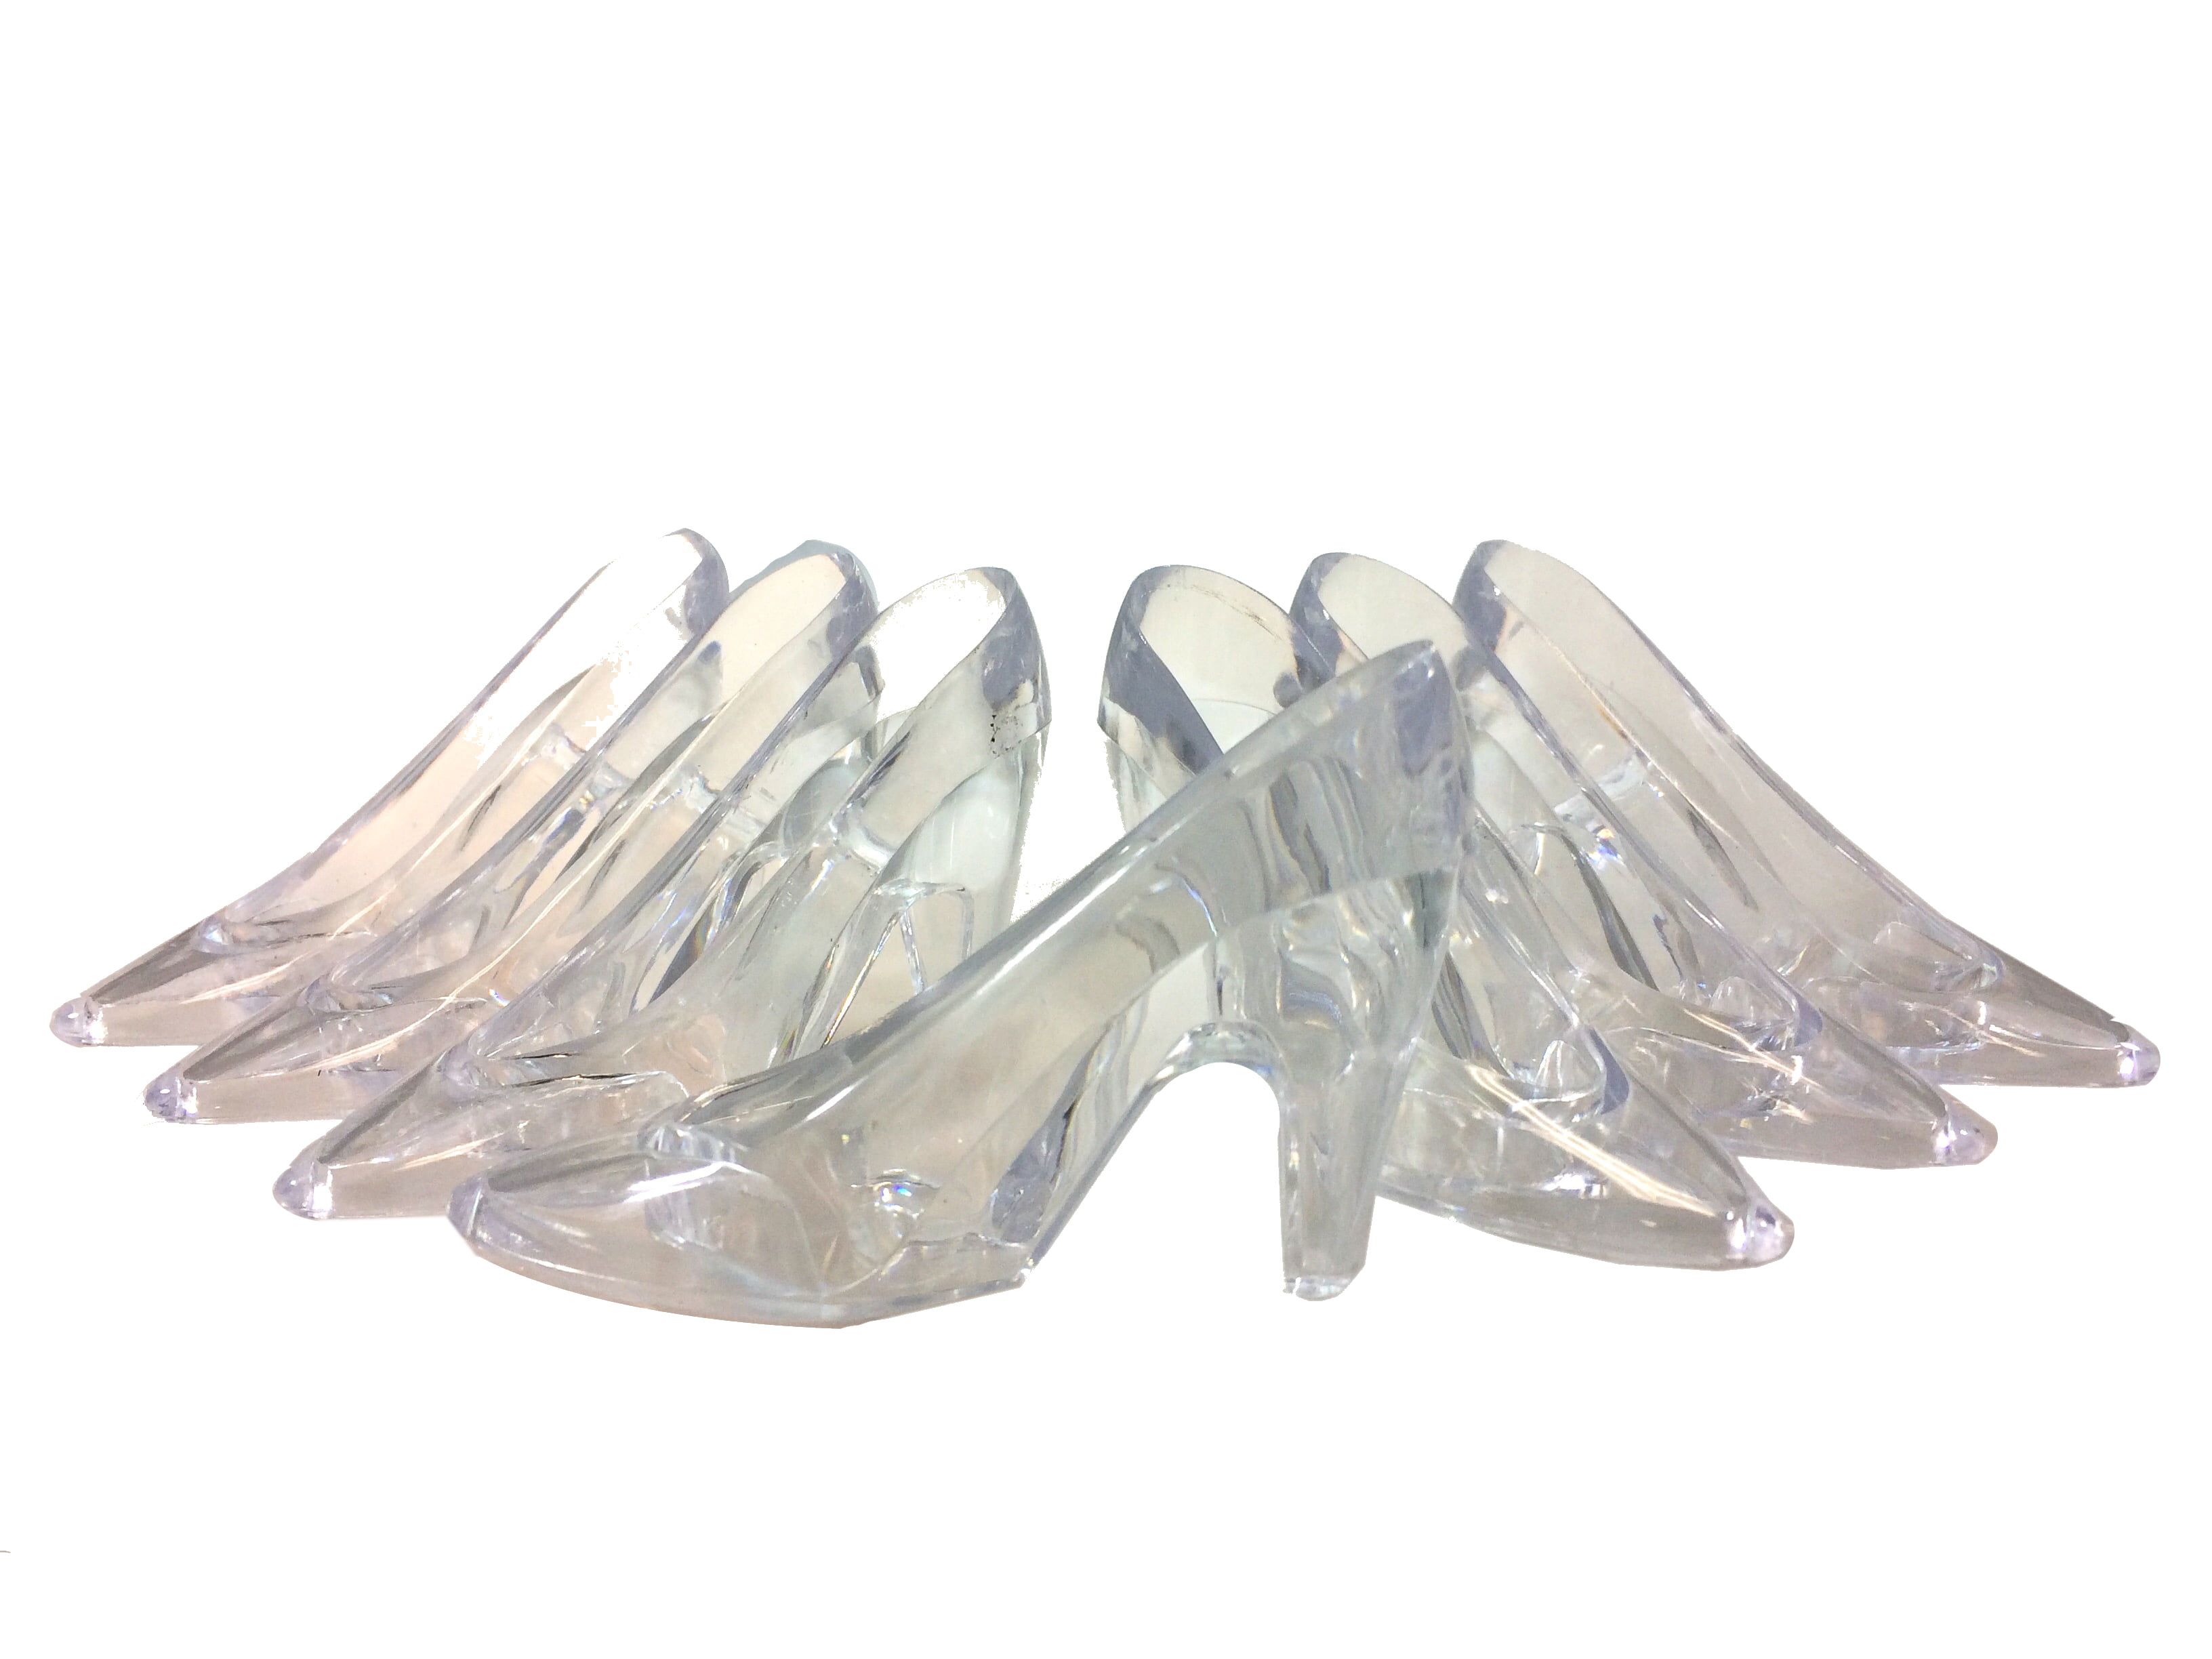 Amazon.com: GIMURM Crystal Slipper Shoe,Acrylic Princess High Heels Shoes  Figurine Ornaments,Decorative Sculpture Shoes,Wedding Shoe Figurines,Party  Decoration,Clear : Home & Kitchen